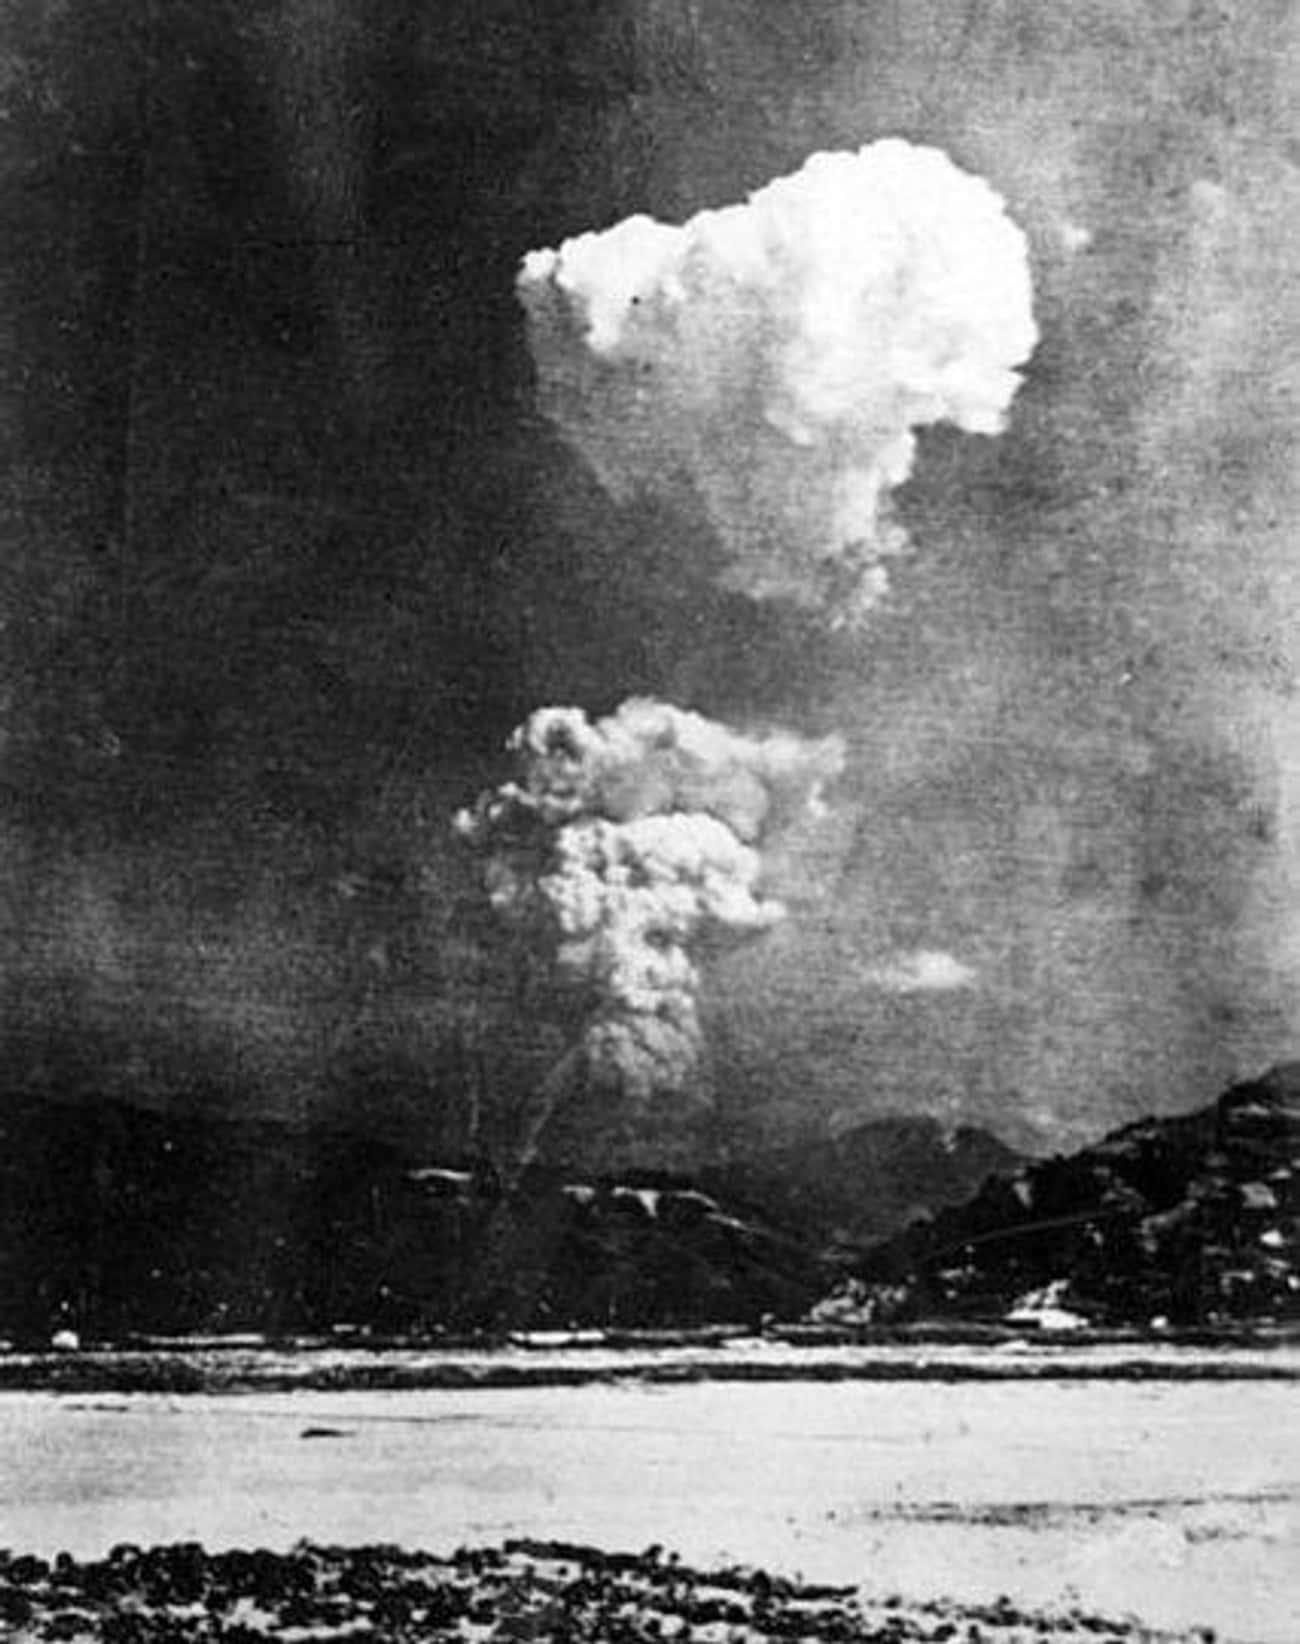 Japanese Schools Emphasize The Victimhood Of Hiroshima Civilians